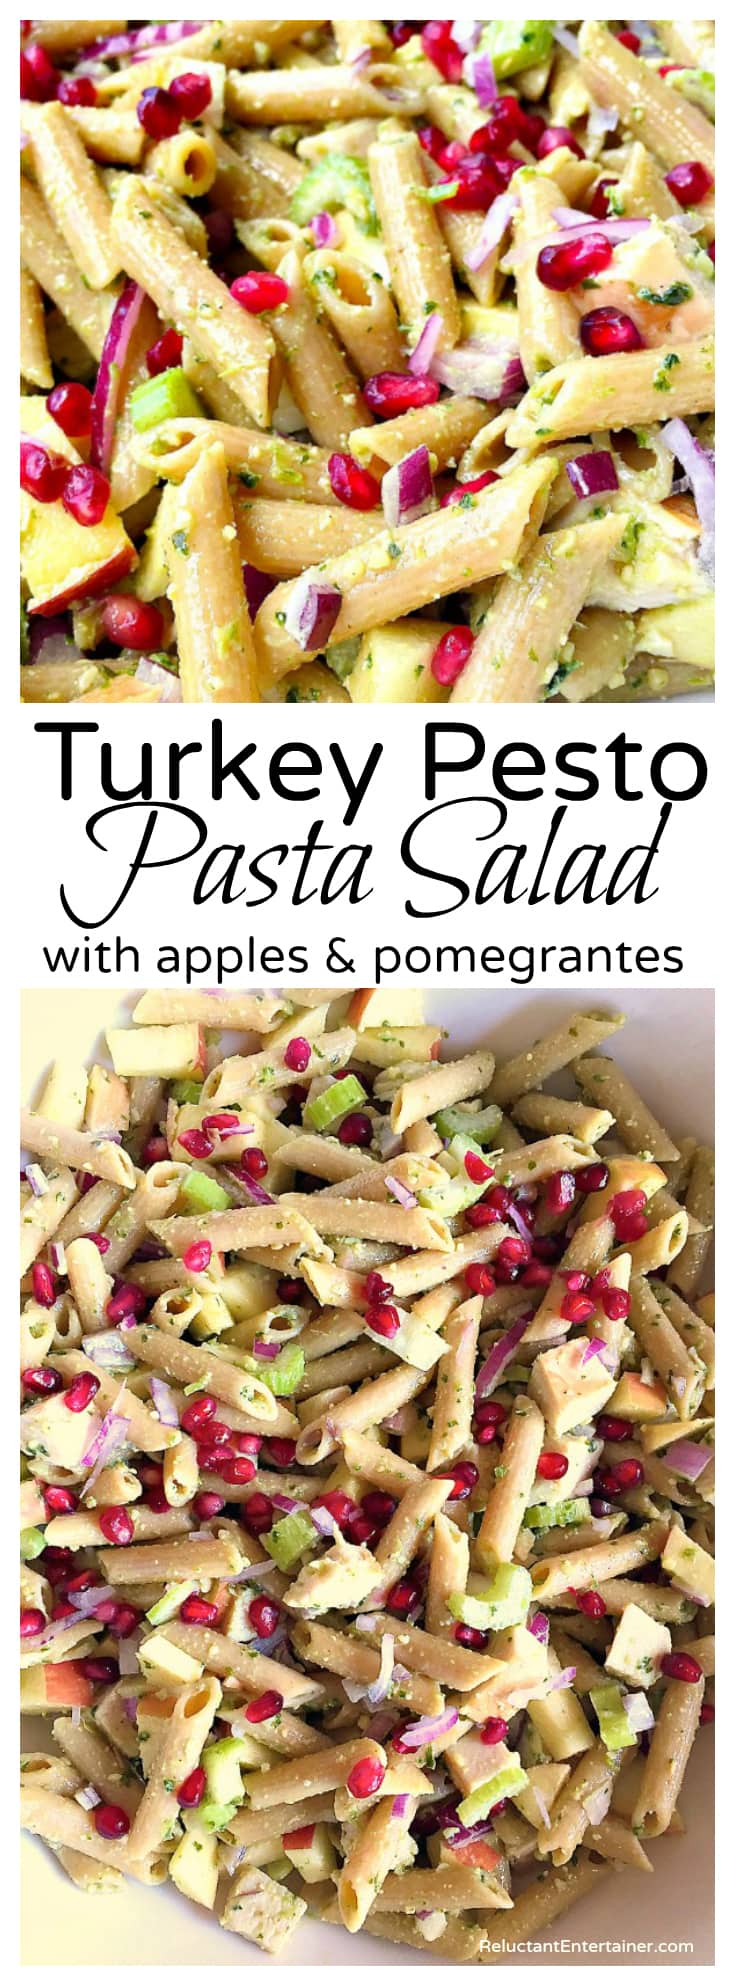 Turkey Pesto Pasta Salad